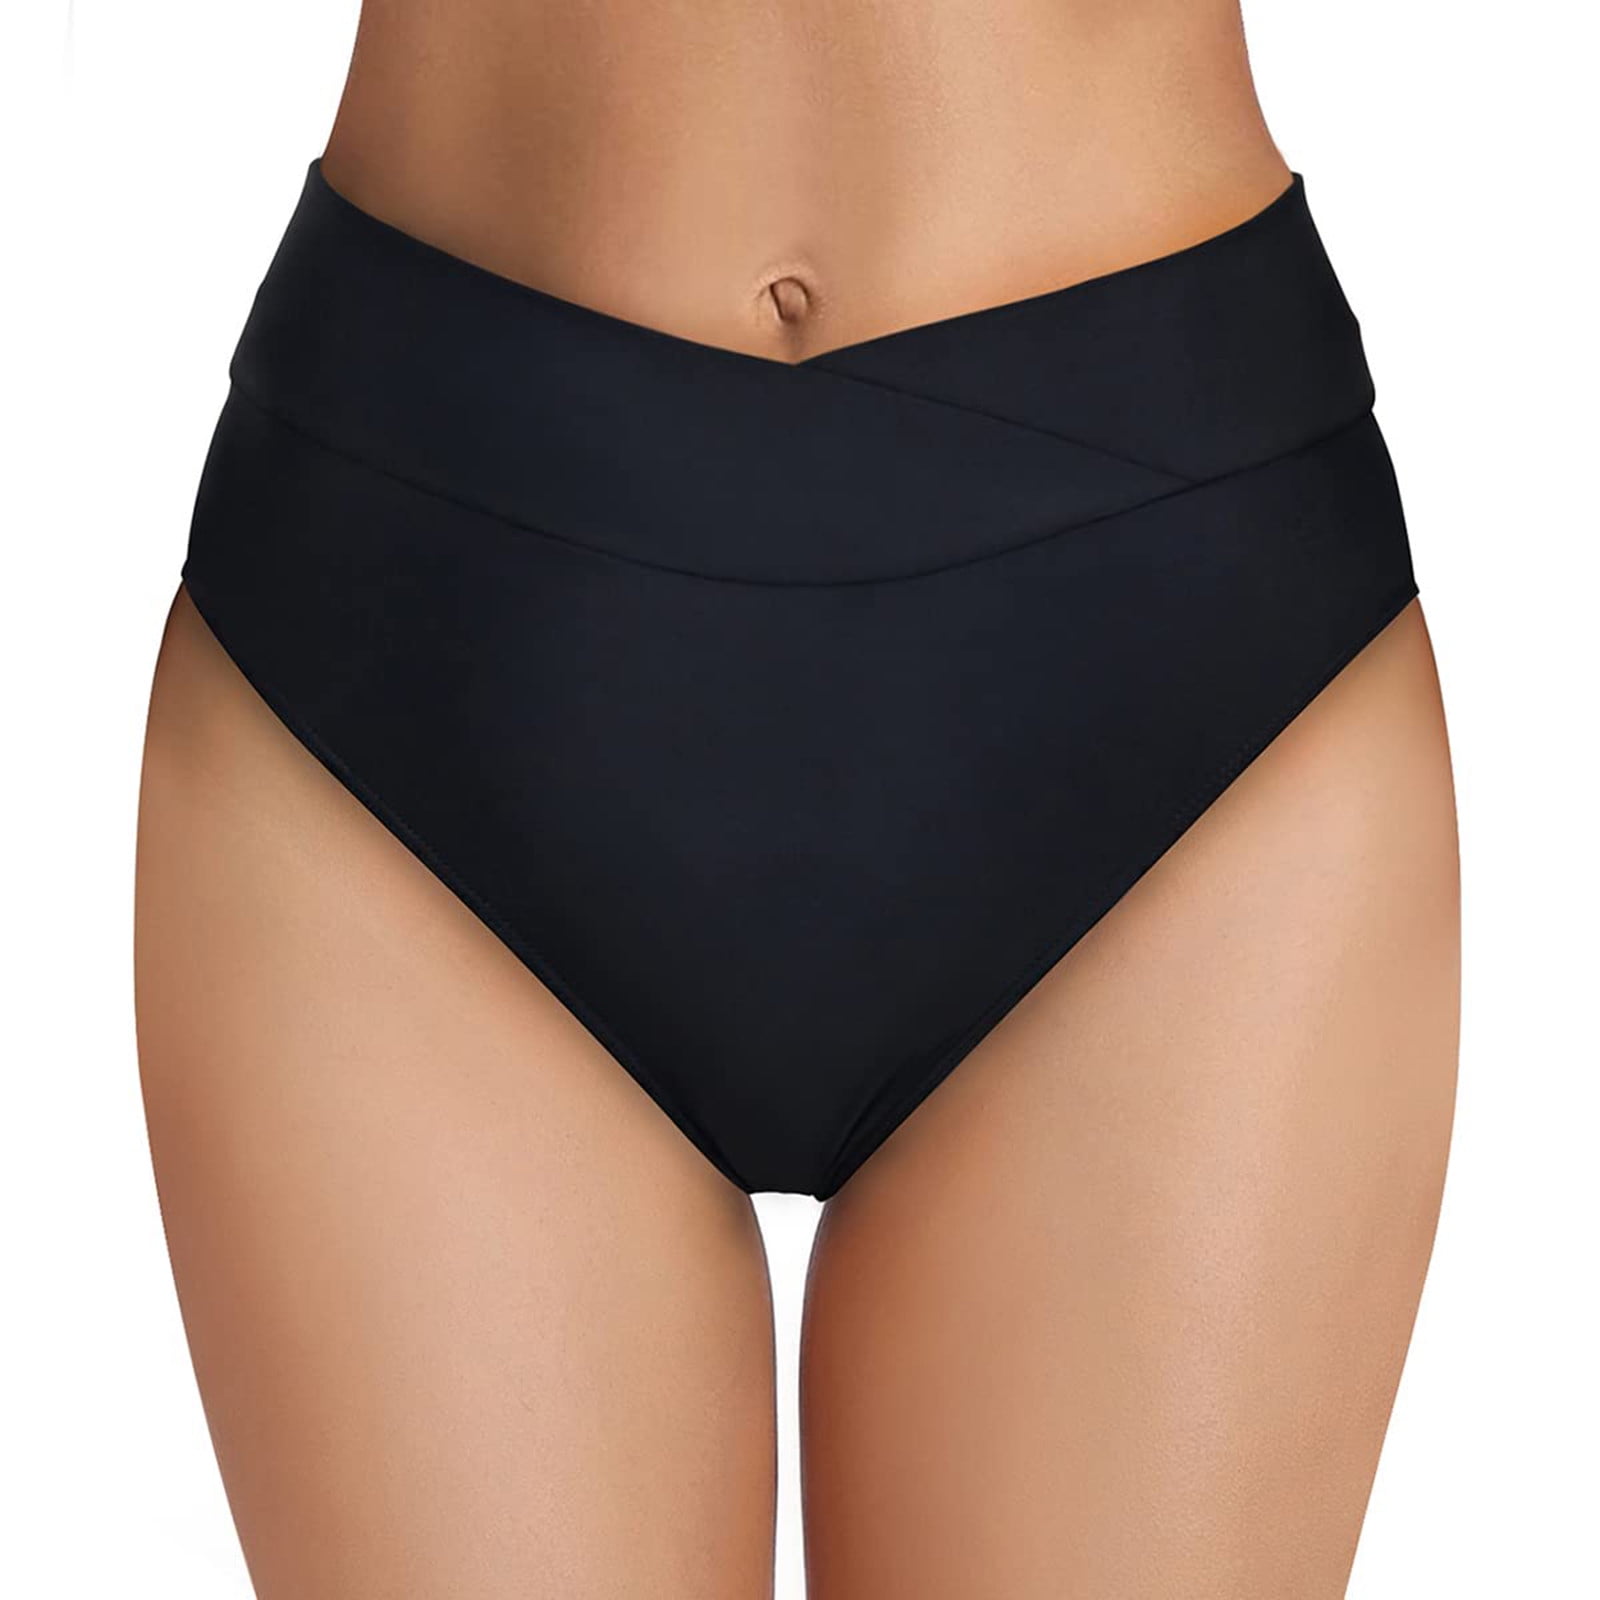 B91xZ Bikini Bottoms for Women High Waisted Bikini Bottoms High Cut Swim  Bottom Full Coverage Swimsuit Bottom Sports Black,L 